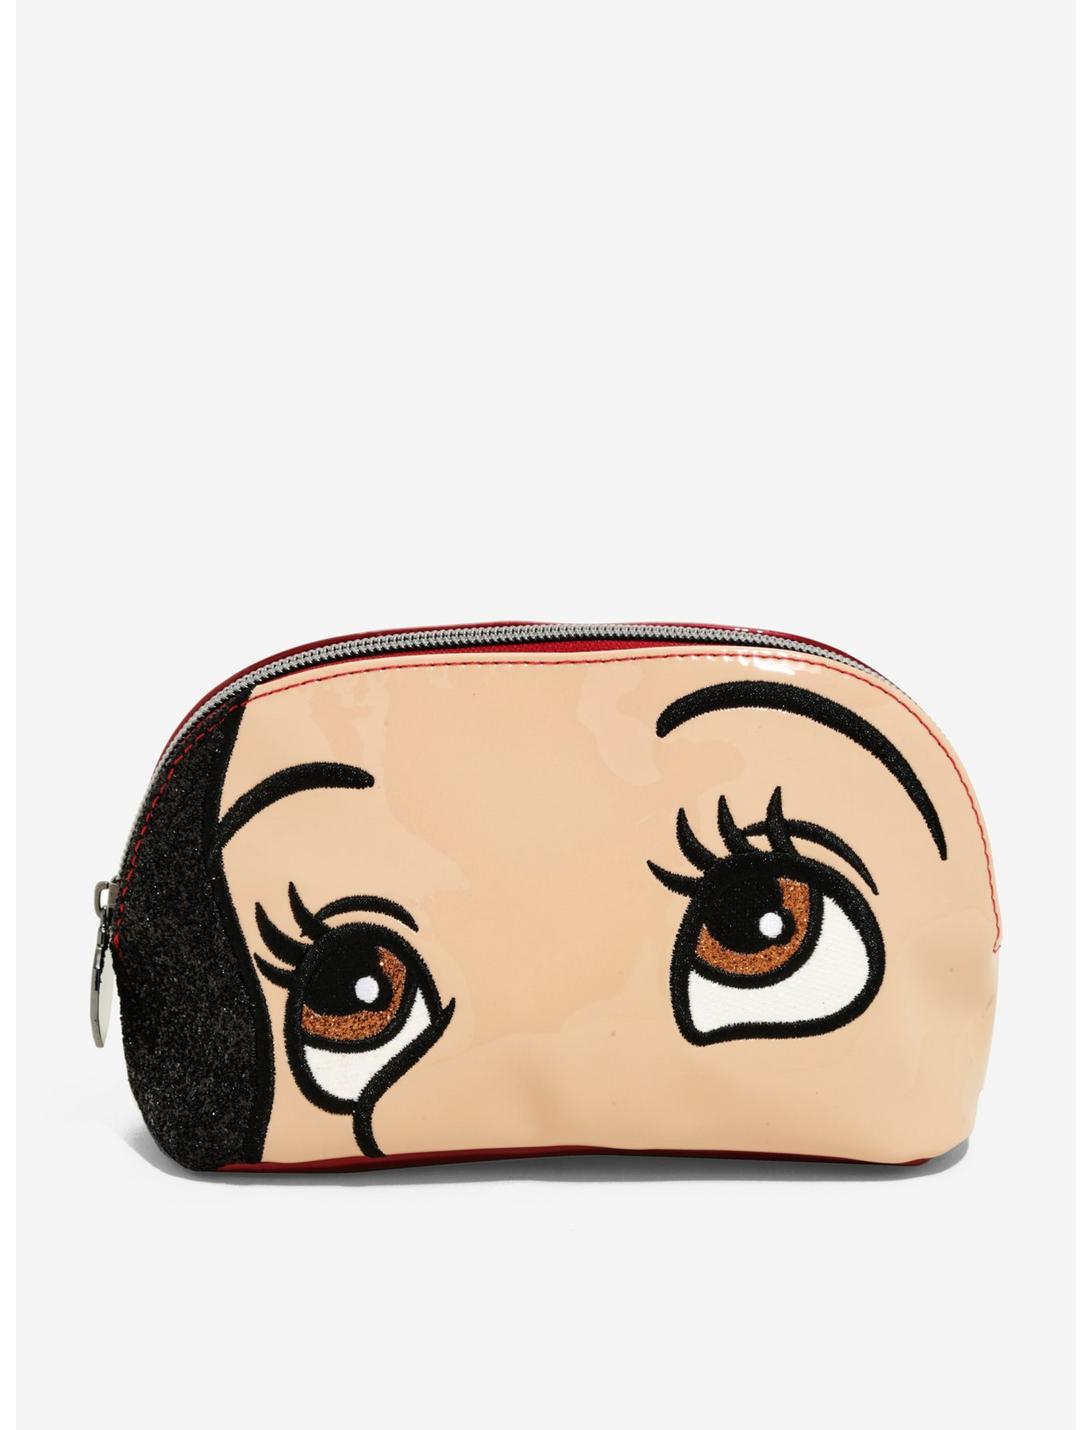 Danielle Nicole Snow White Eyes Makeup Bag, , hi-res